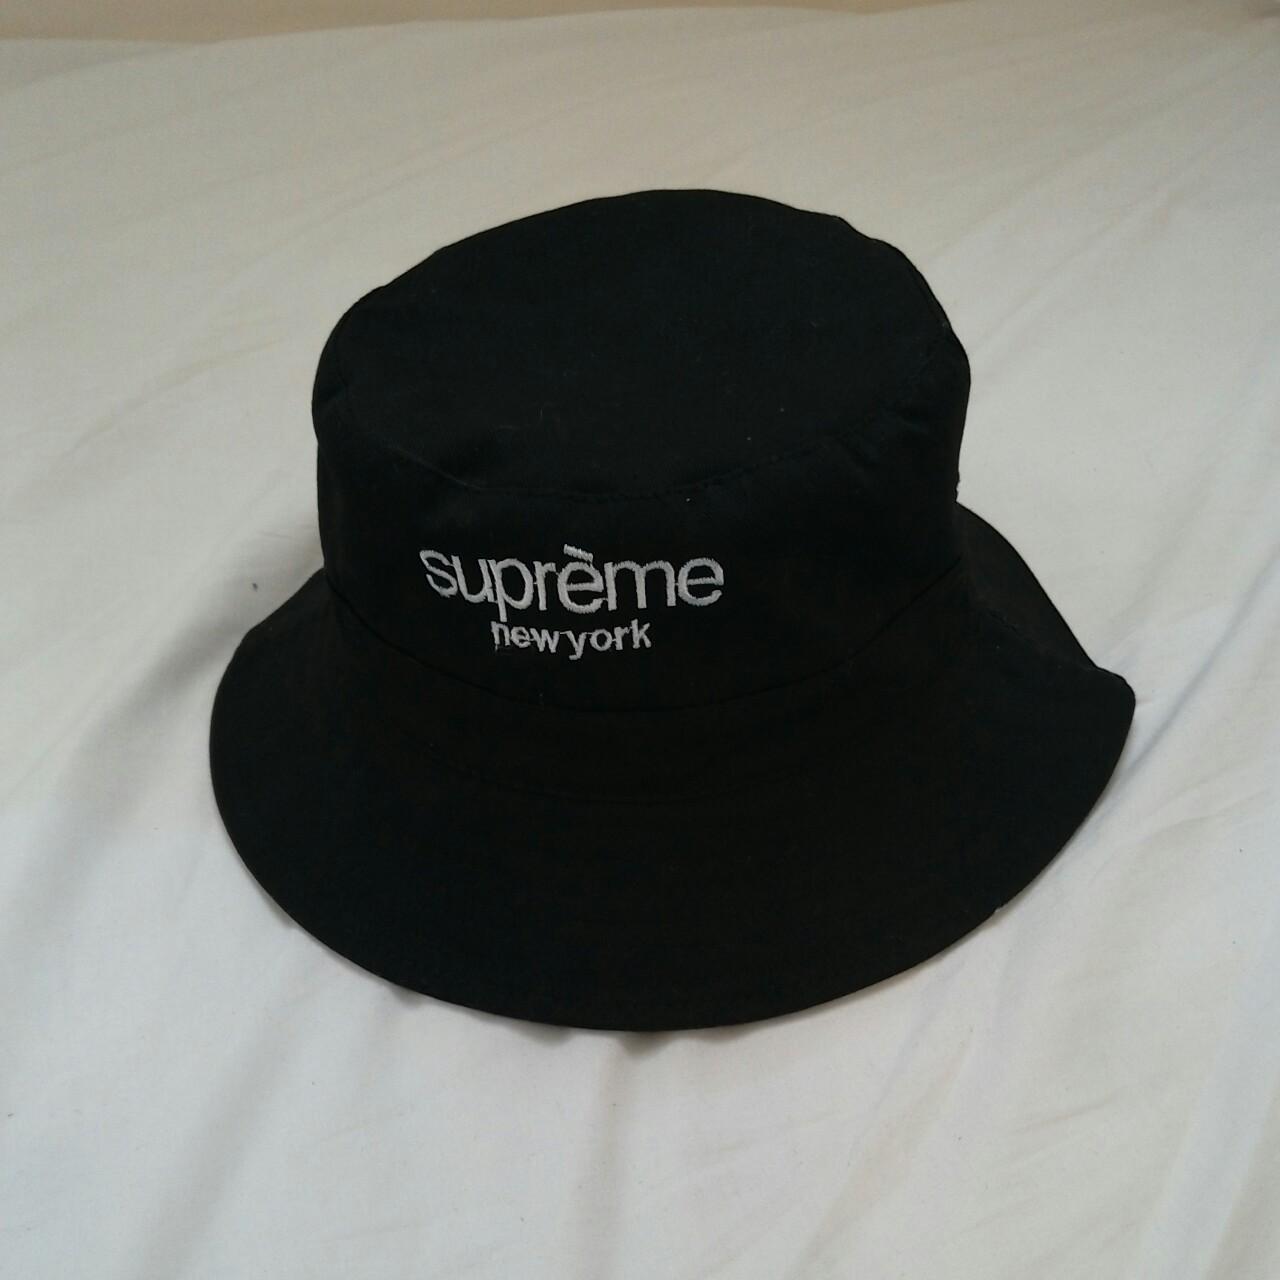 Supreme new York original logo black bucket hat, - Depop